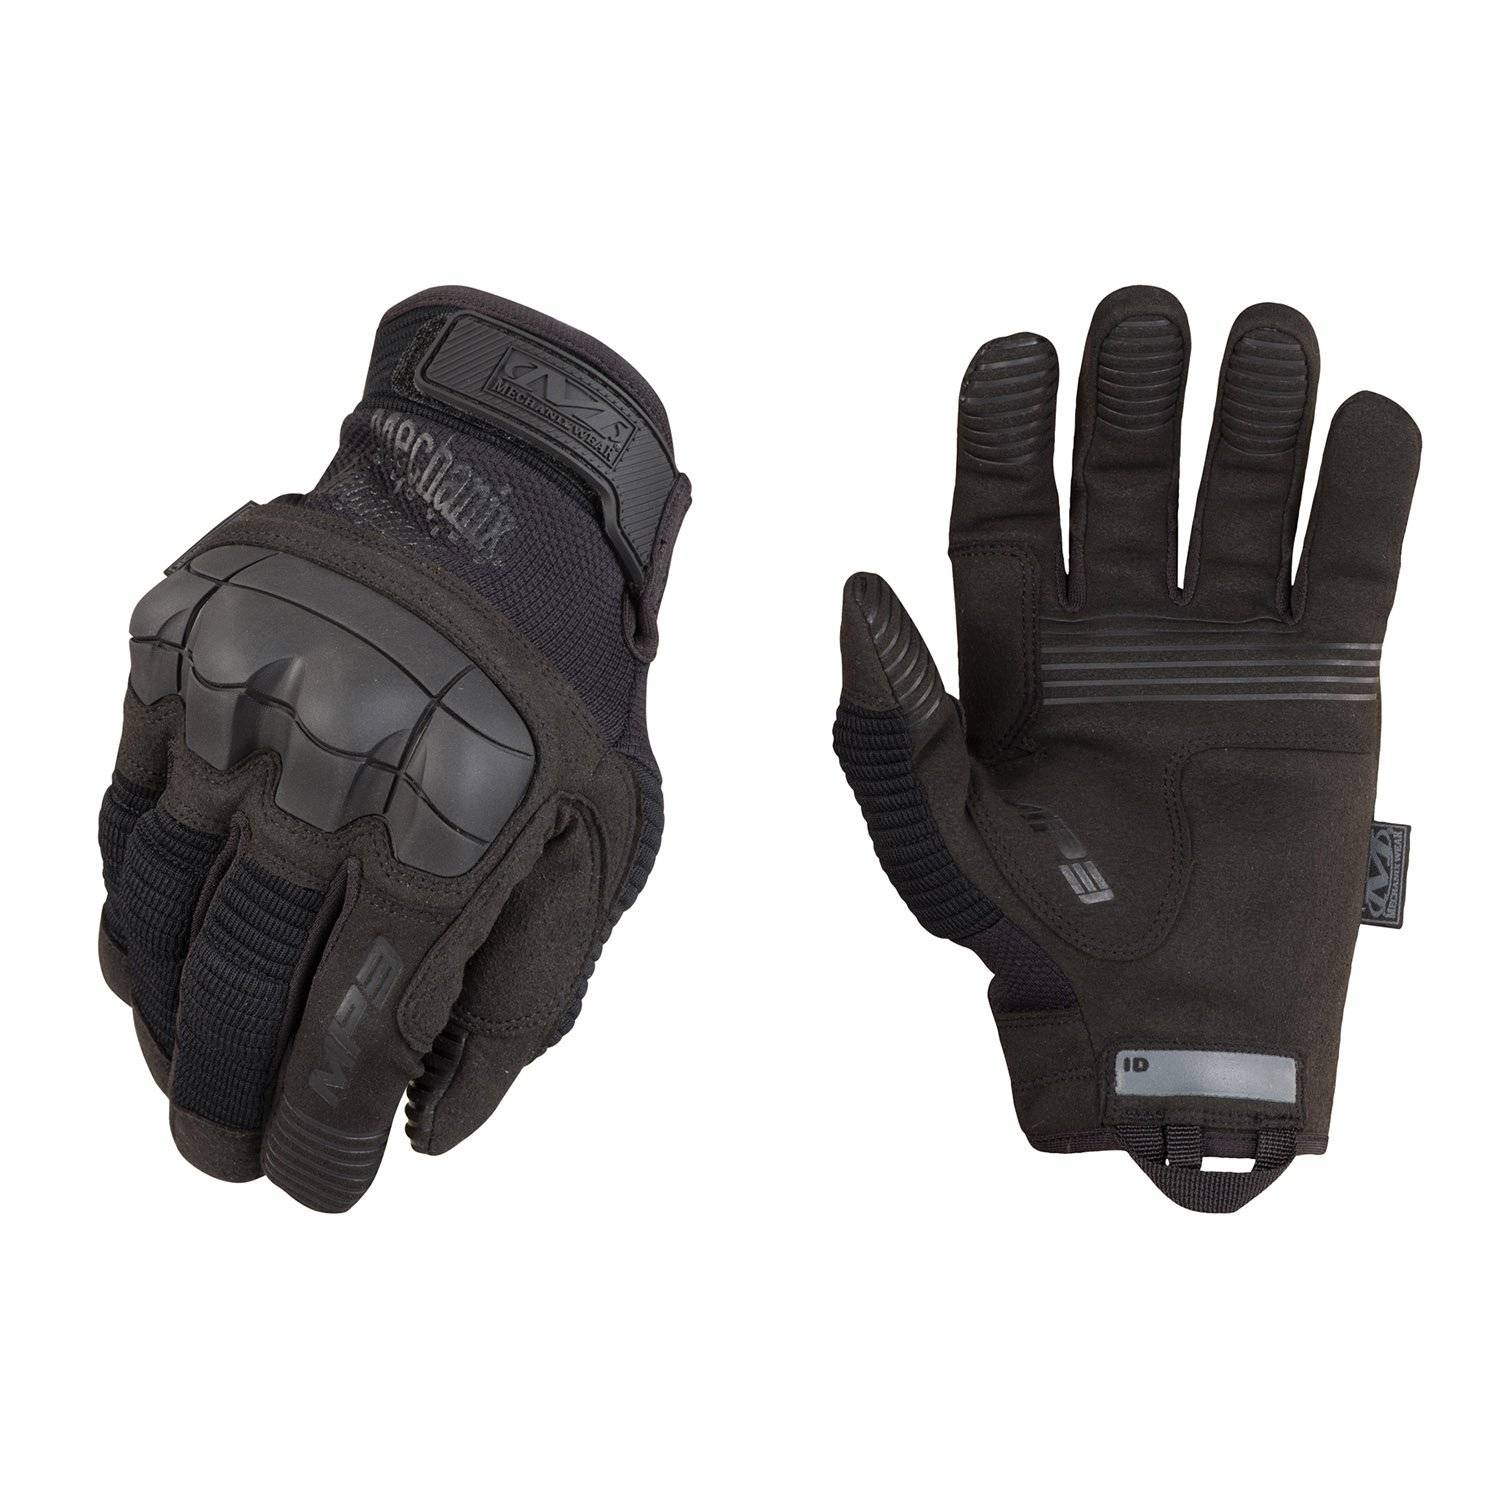 M Fast Shipping!!!!! Mechanix Wear M-Pact Glove Brand New ! Black